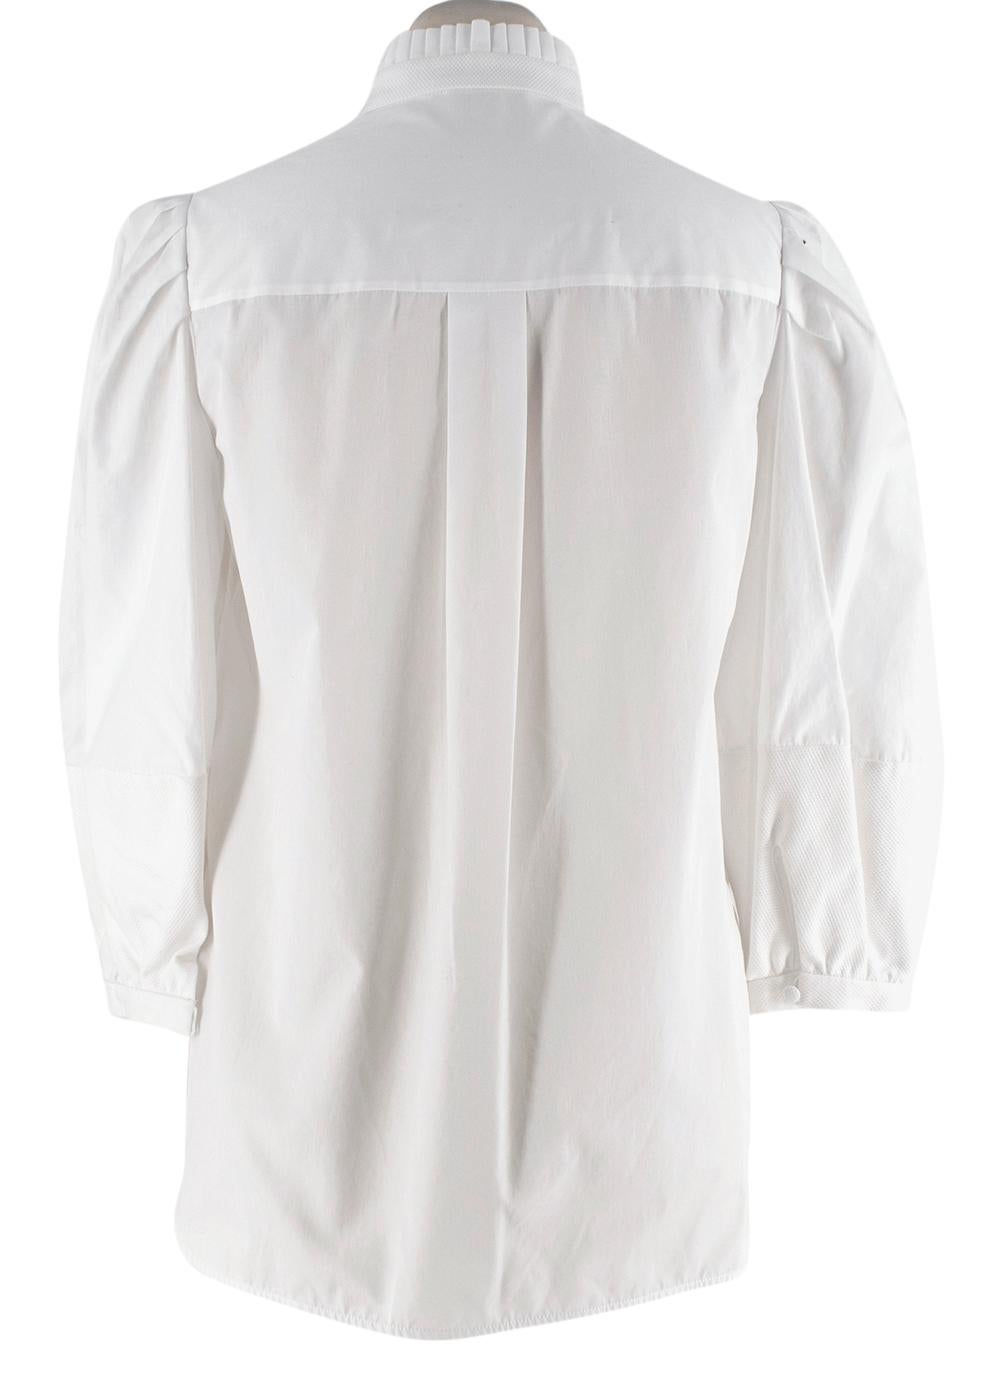 Gray Alexander McQueen White Poplin & Waffle Cotton Shirt US 2-4 For Sale